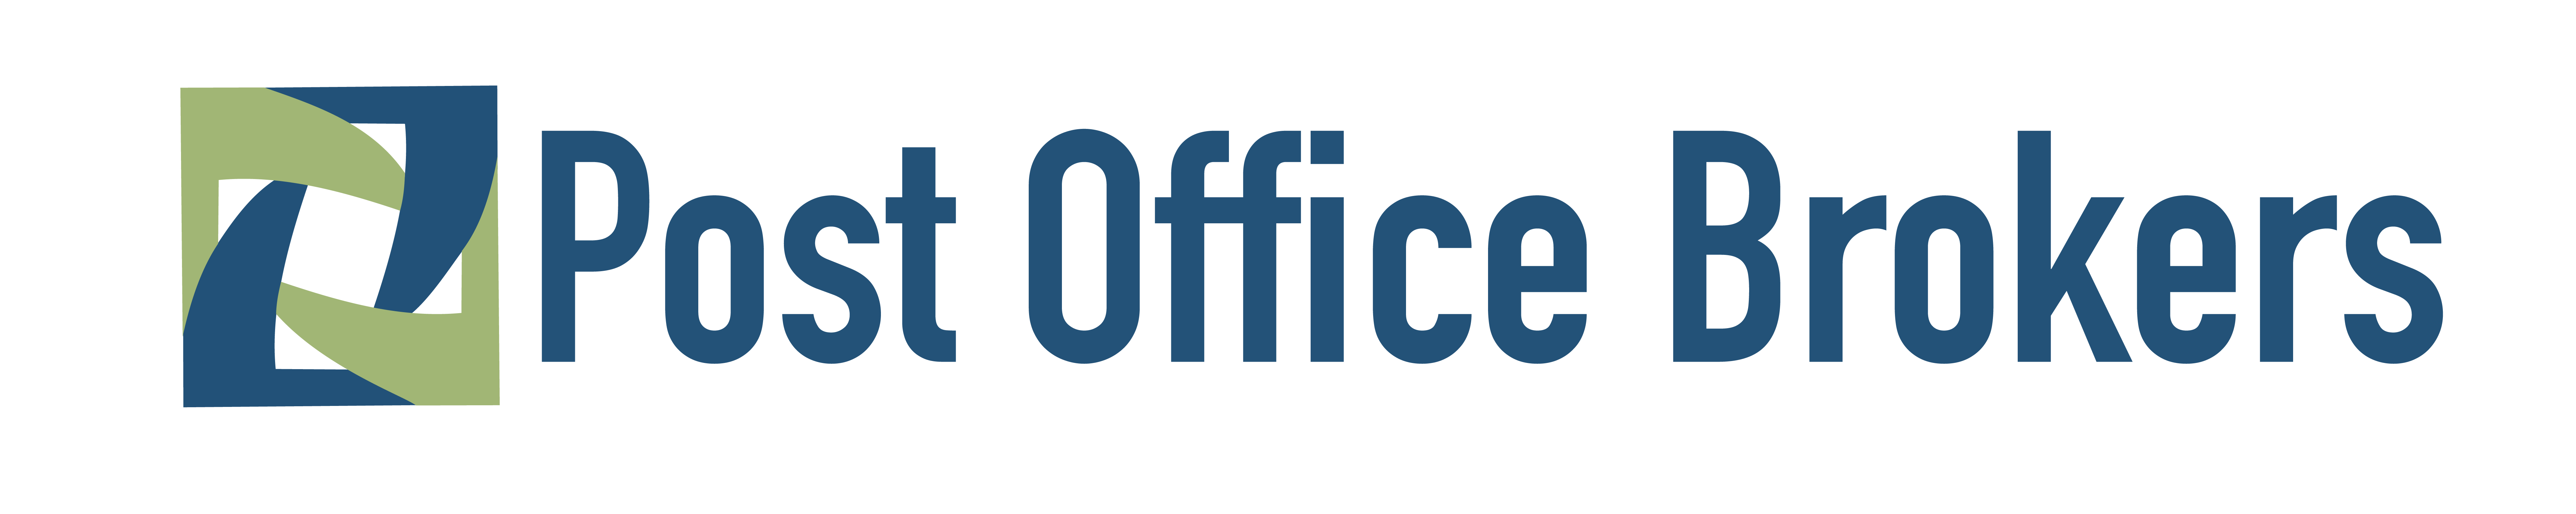 Post Office Brokers Logo